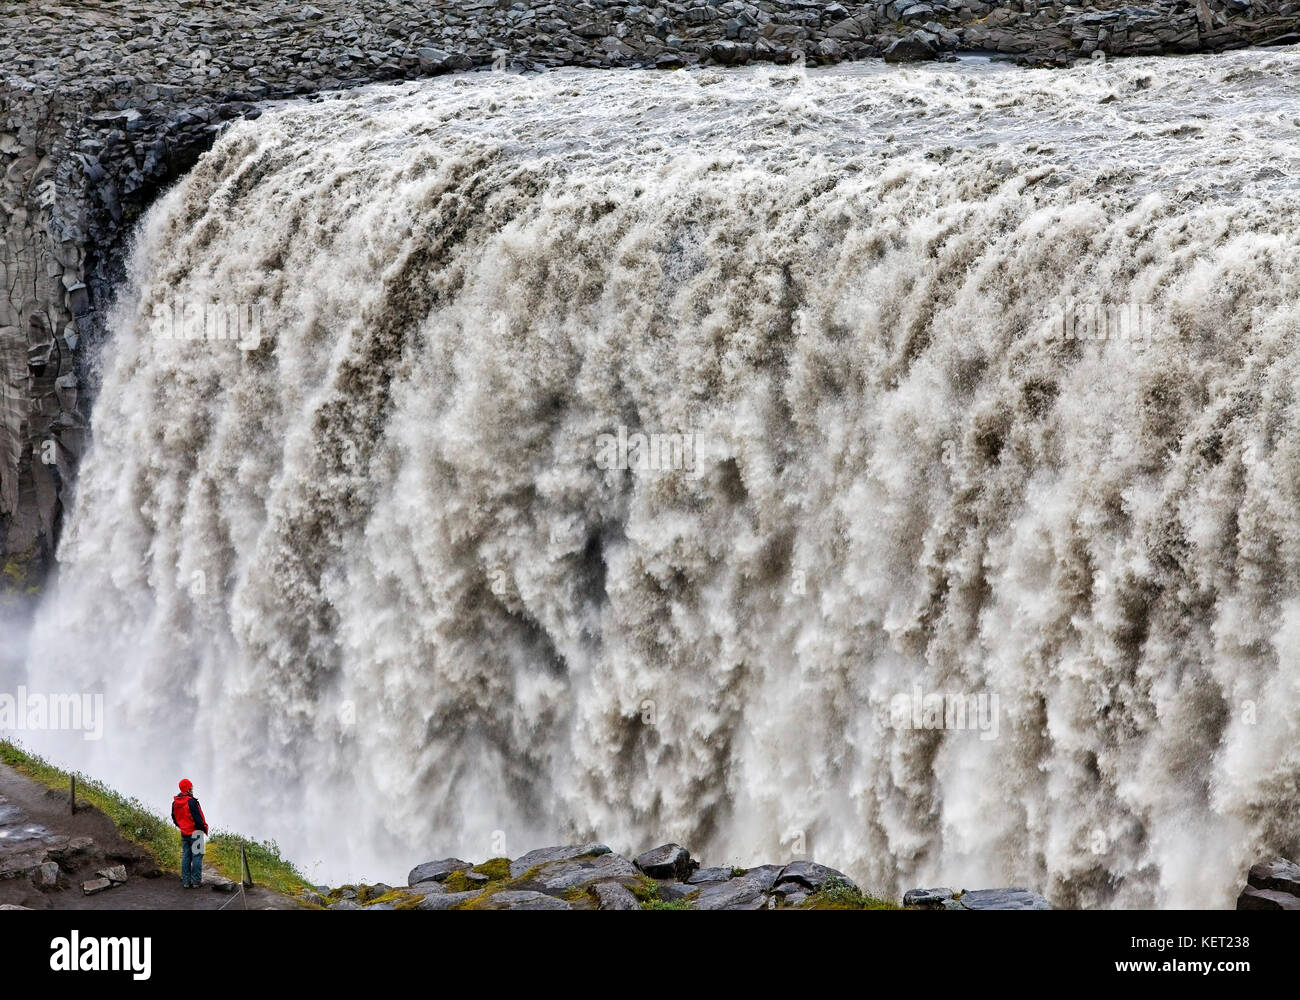 Persona presso la cascata Dettifoss, fiume Jökulsá á Fjöllum, Islanda del Nord, Islanda Foto Stock